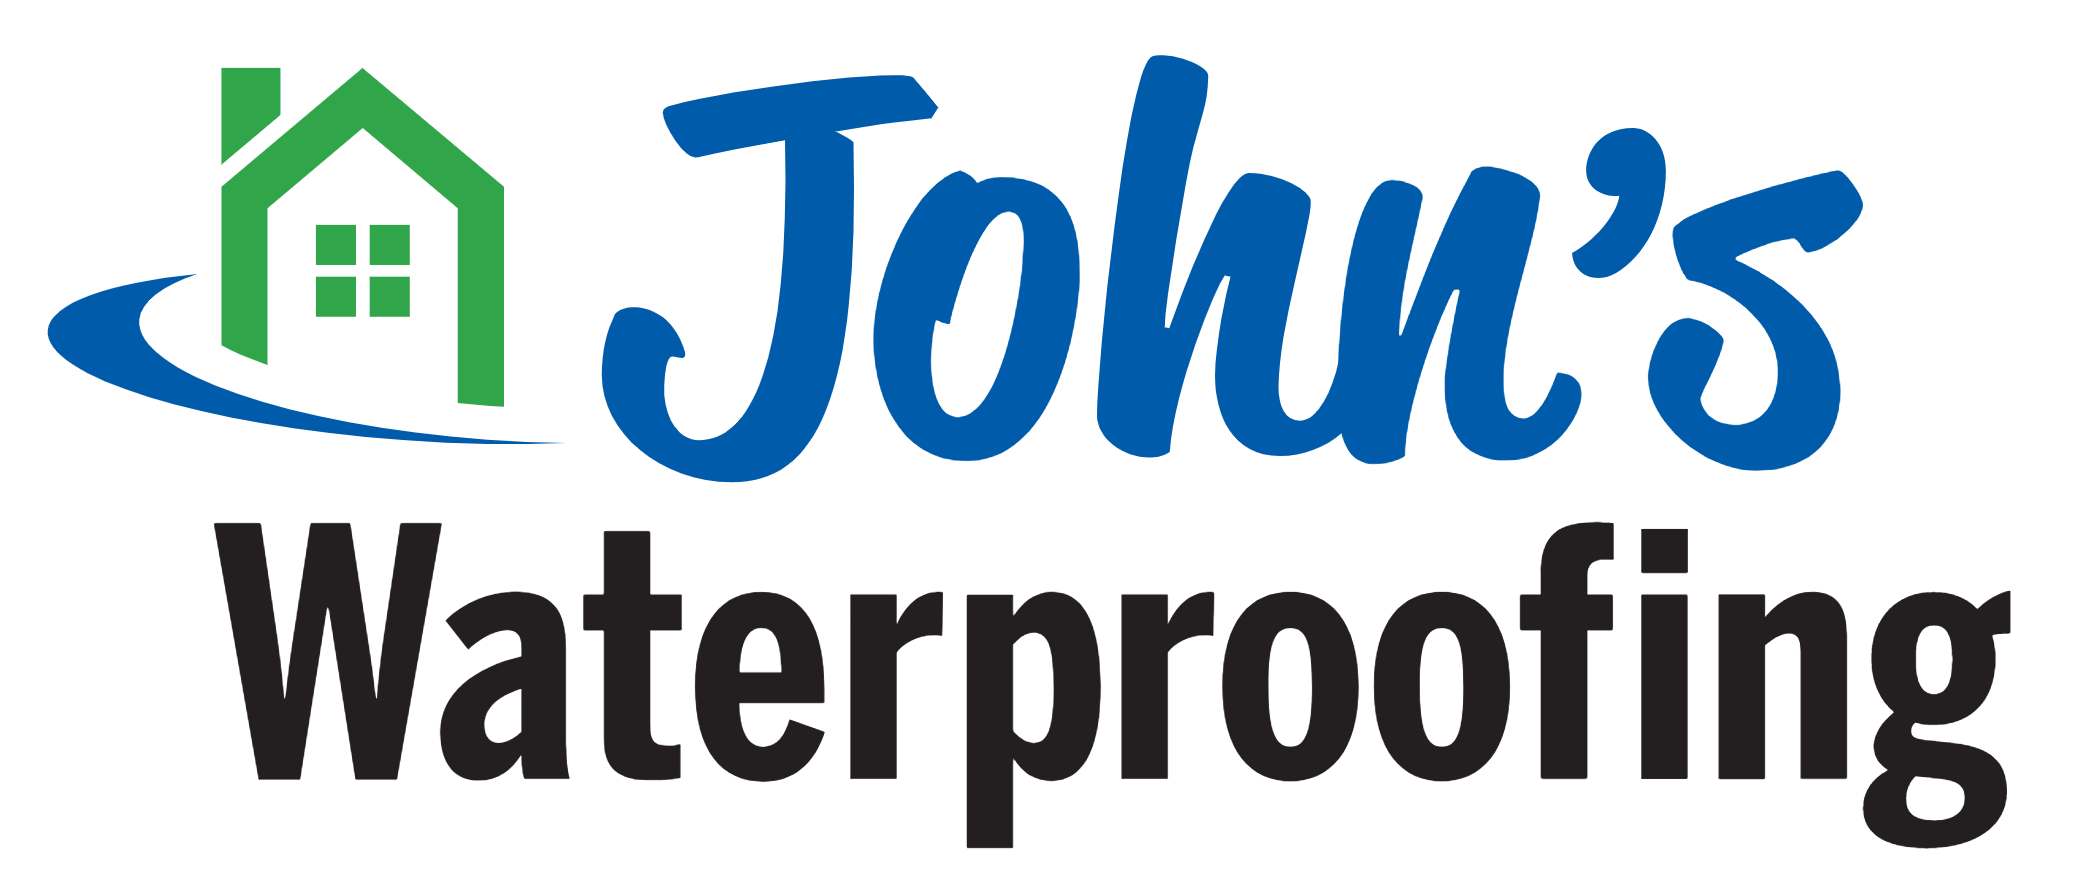 John's Waterproofing